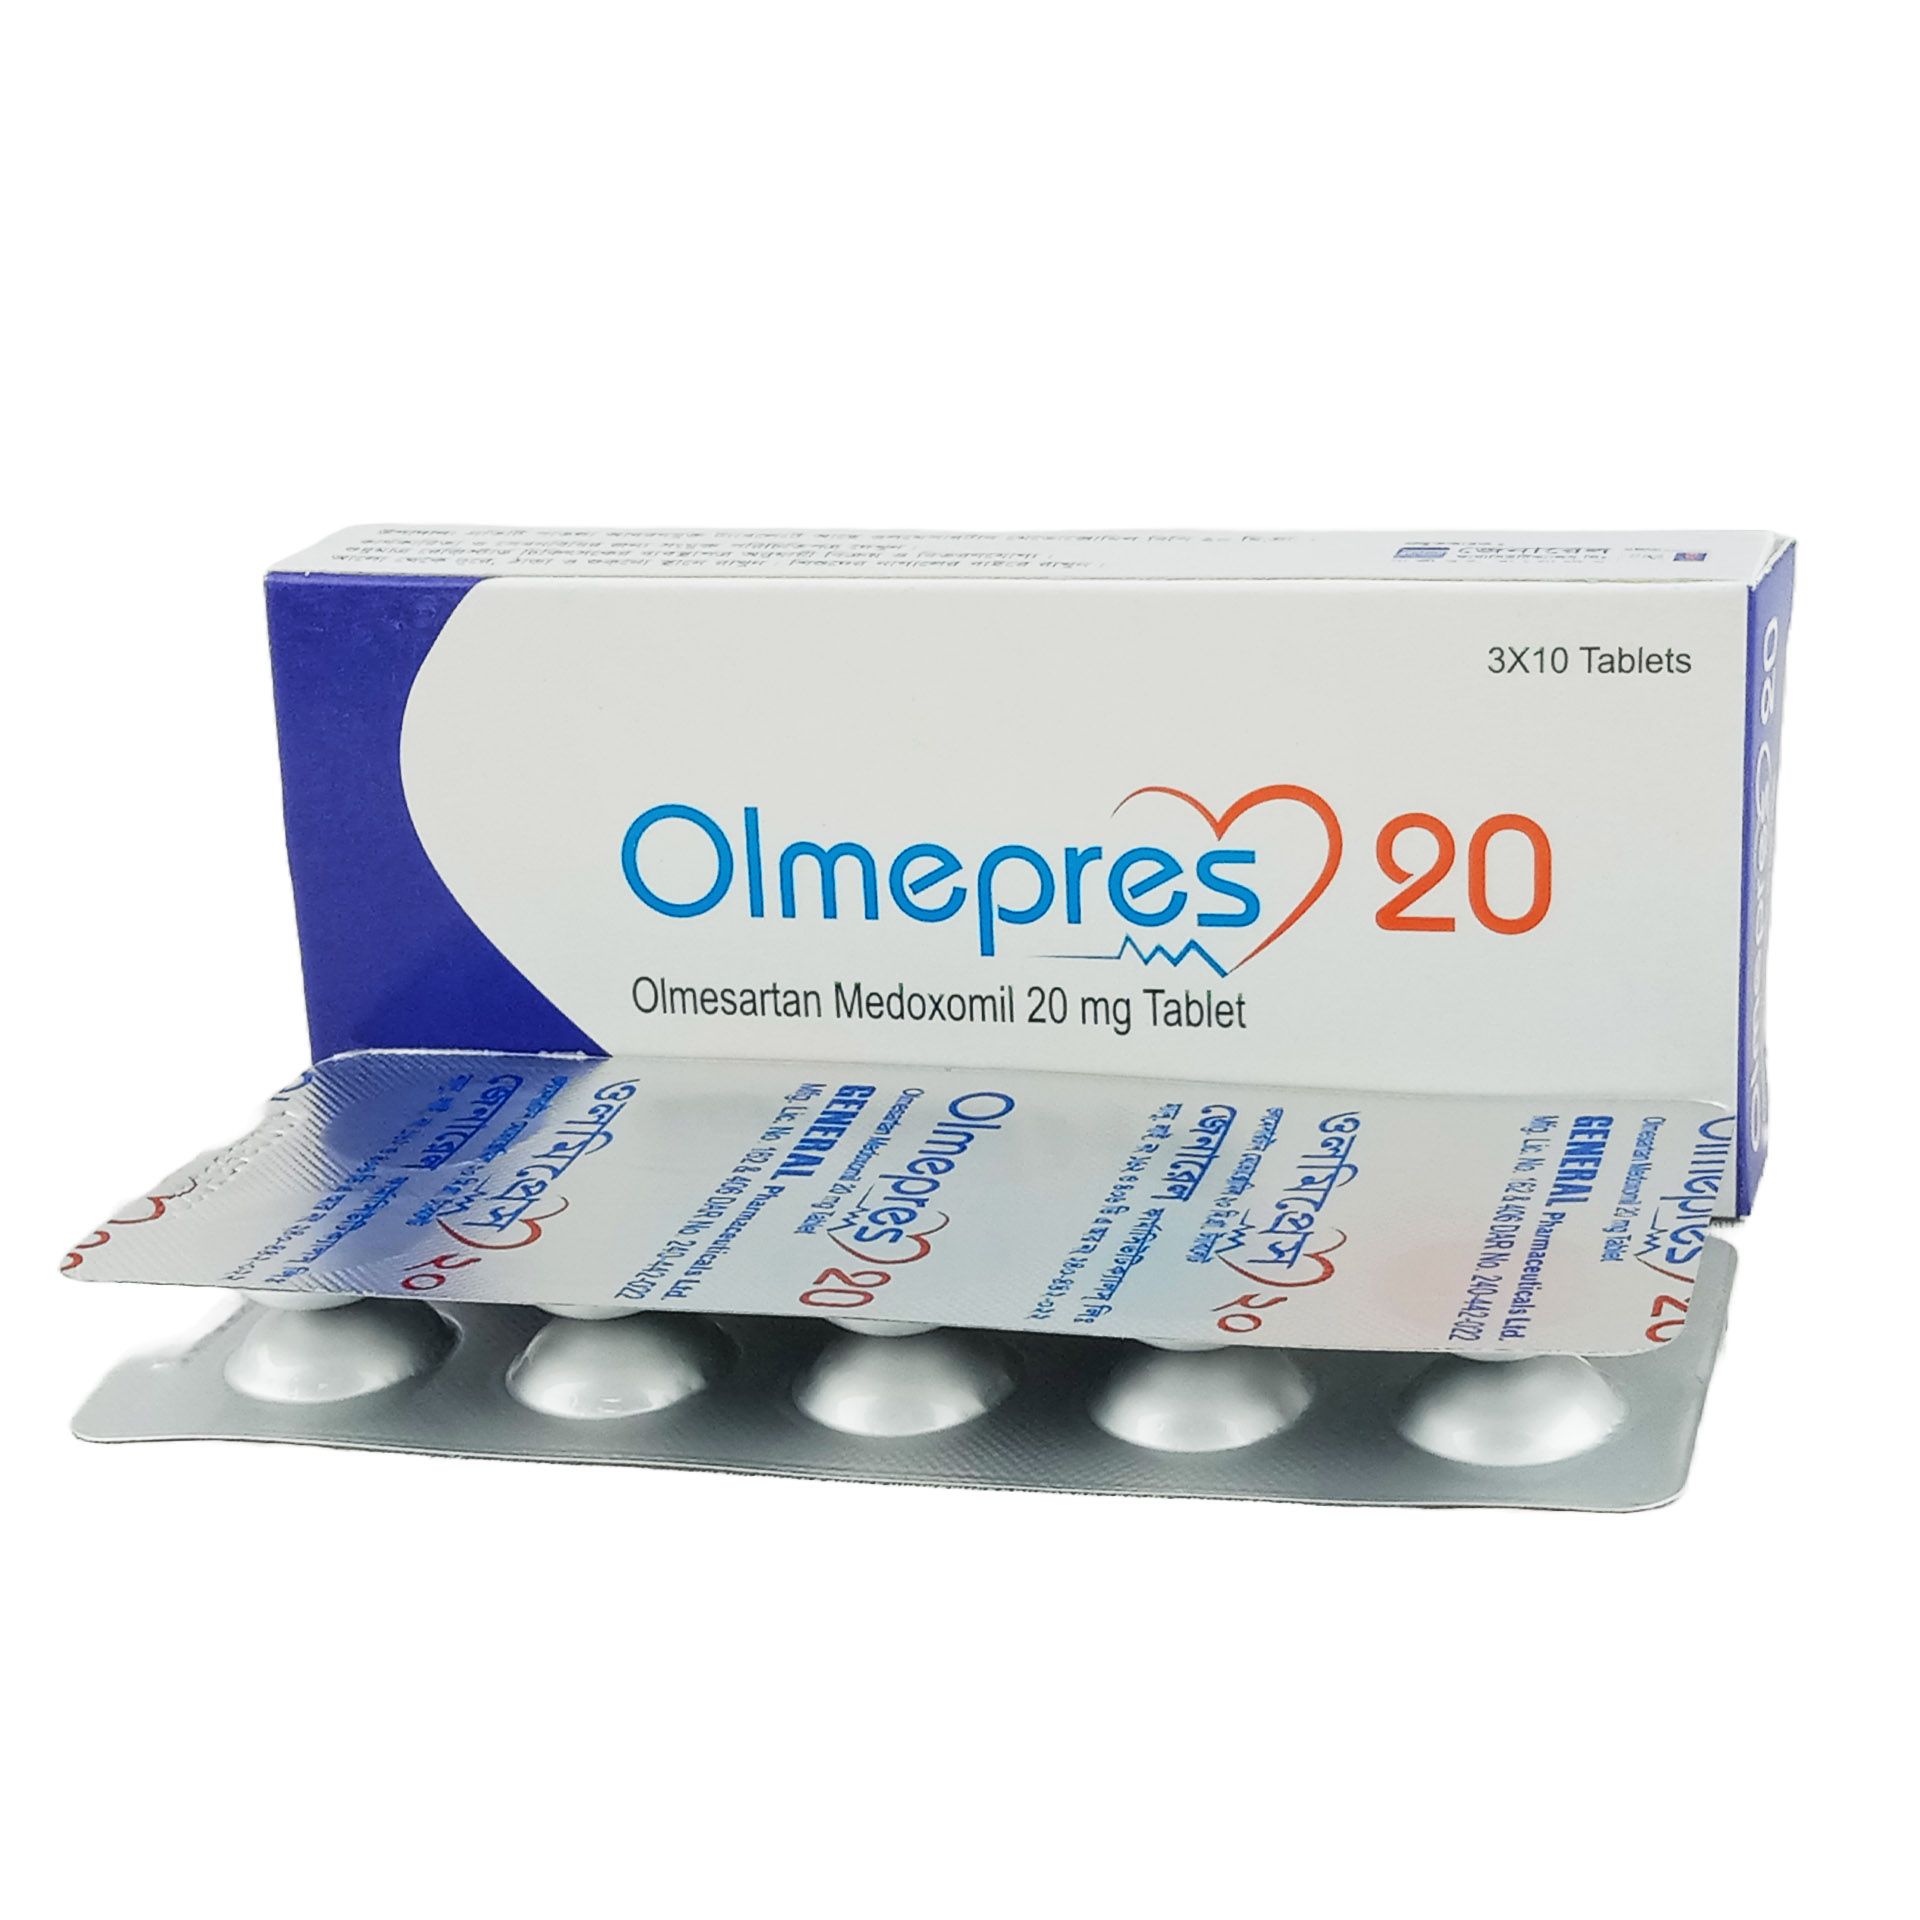 Olmepres 20mg Tablet